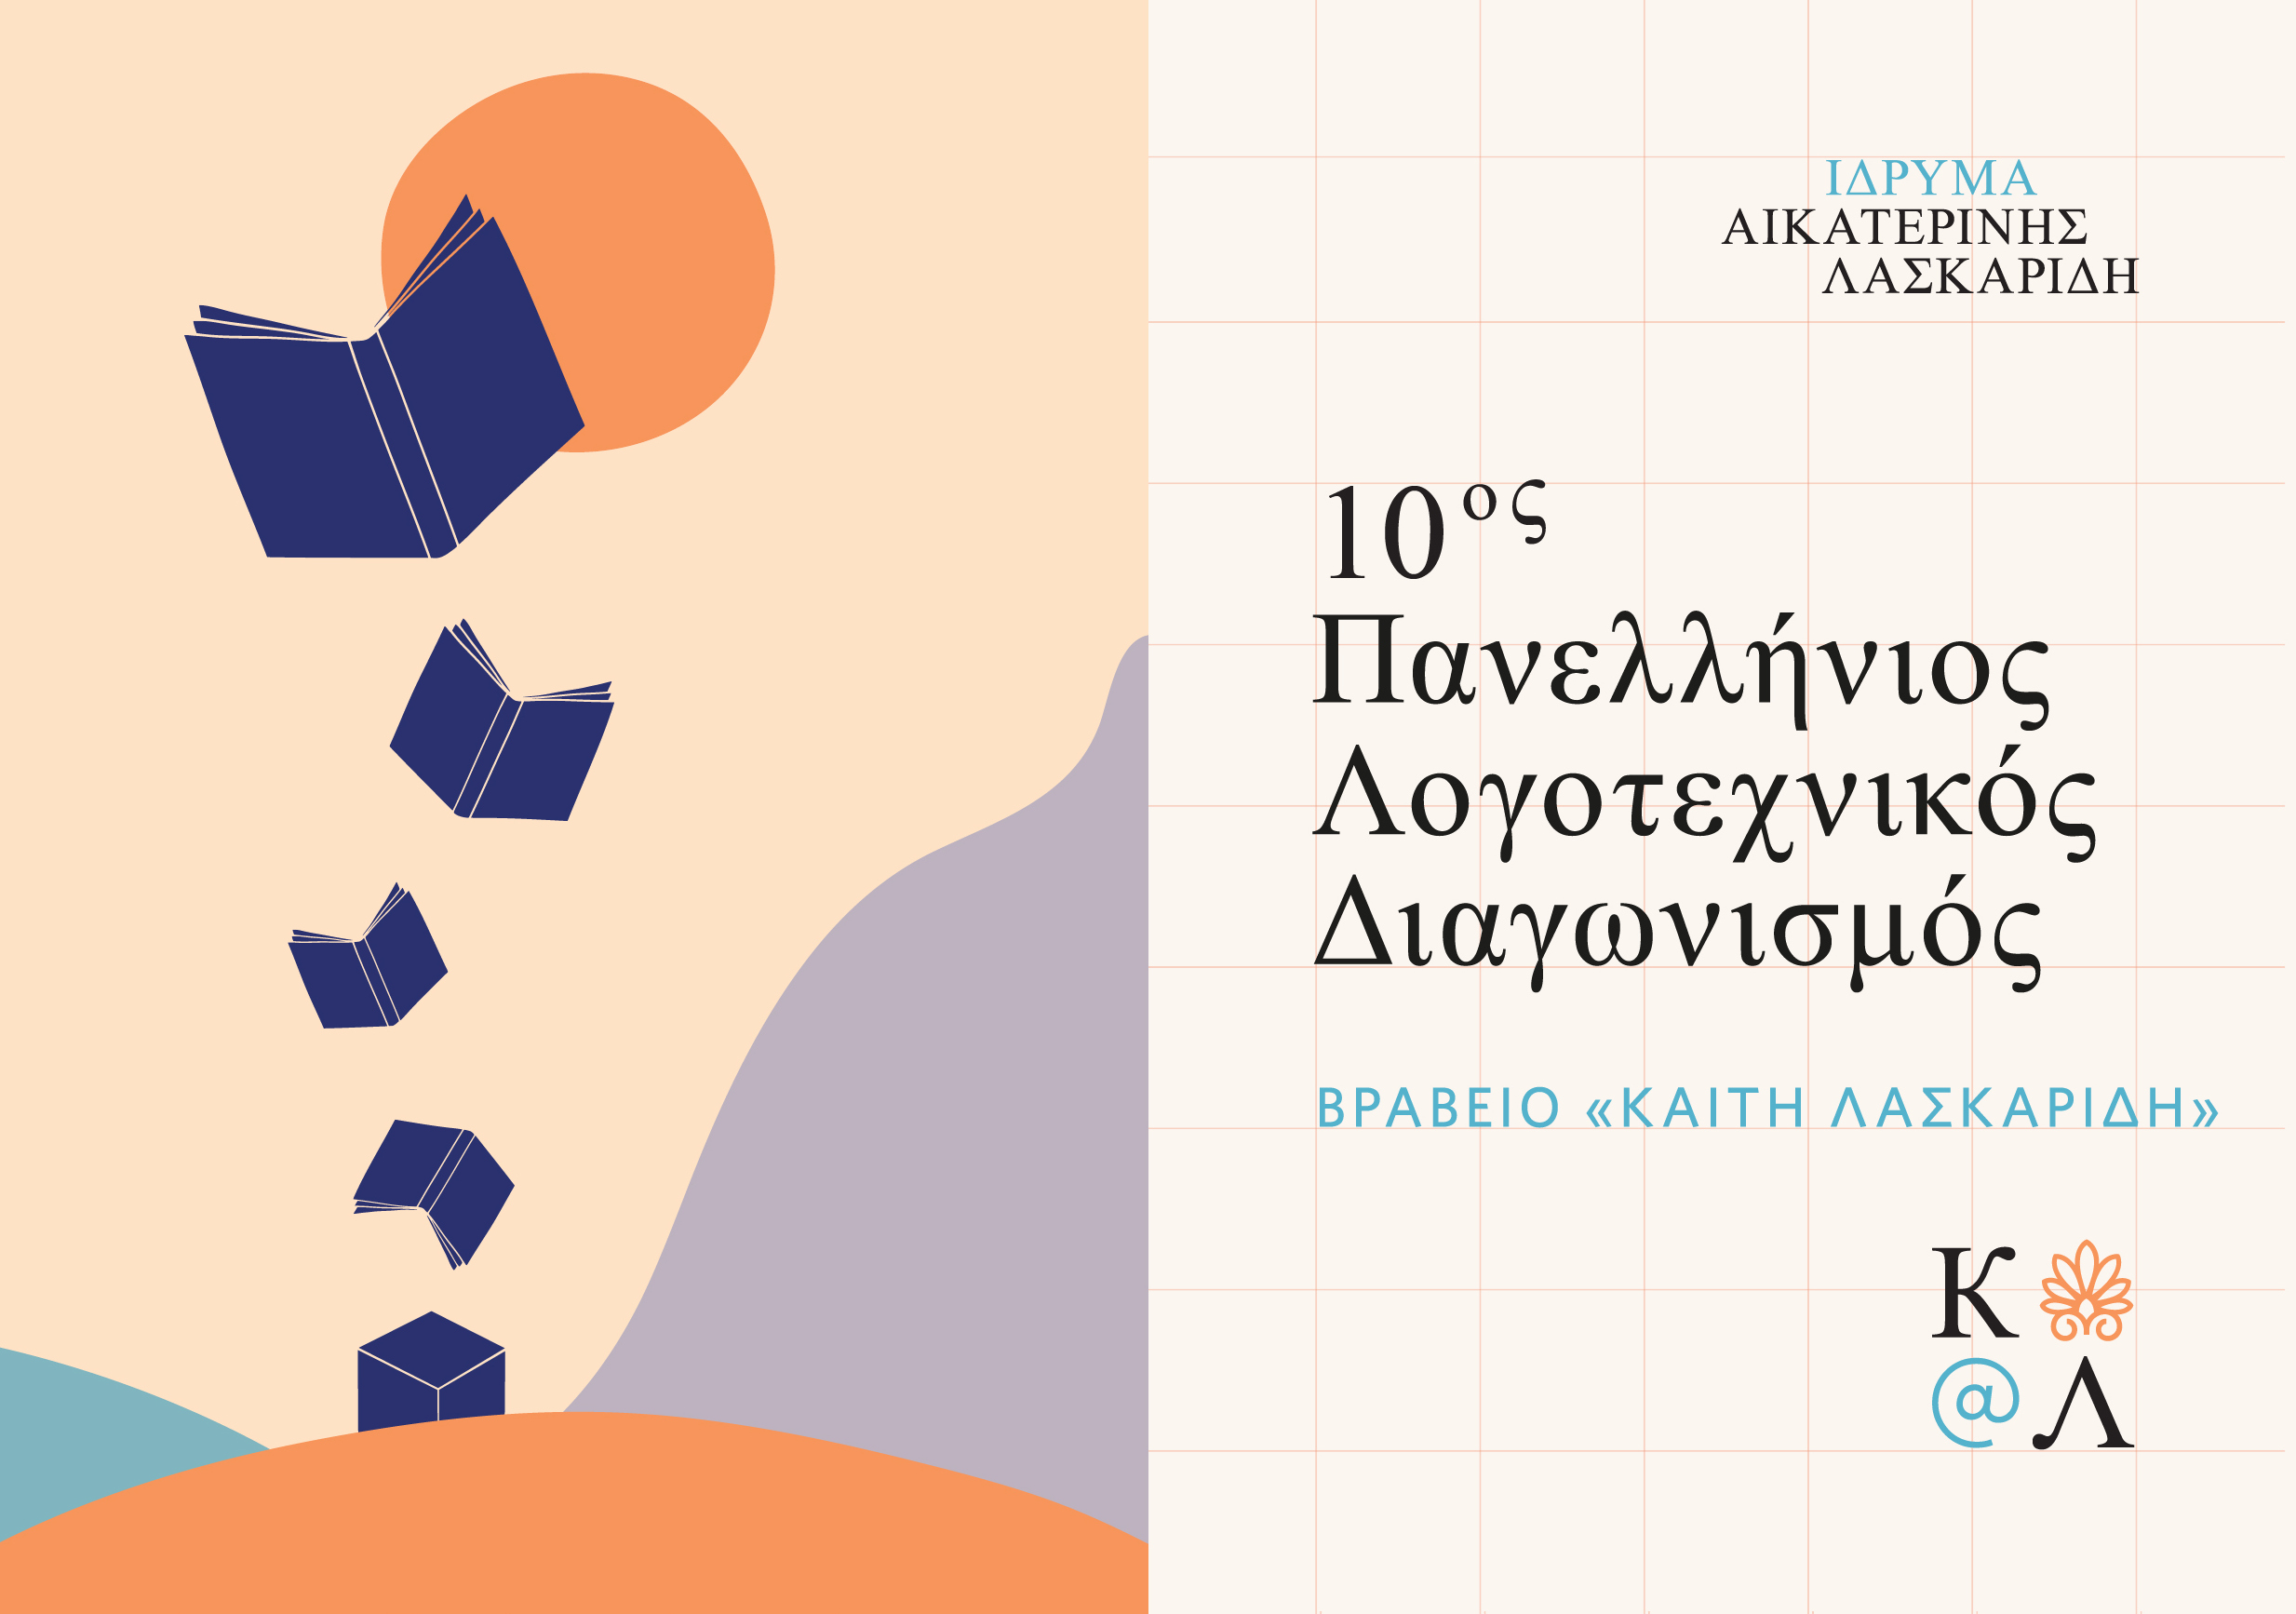 Aikaterini Laskaridis Foundation-ΠΡΟΚΗΡΥΞΗ 10ου Πανελλήνιου Λογοτεχνικού Διαγωνισμού Πρωτόλειου Διηγήματος στη μνήμη Καίτης Λασκαρίδη